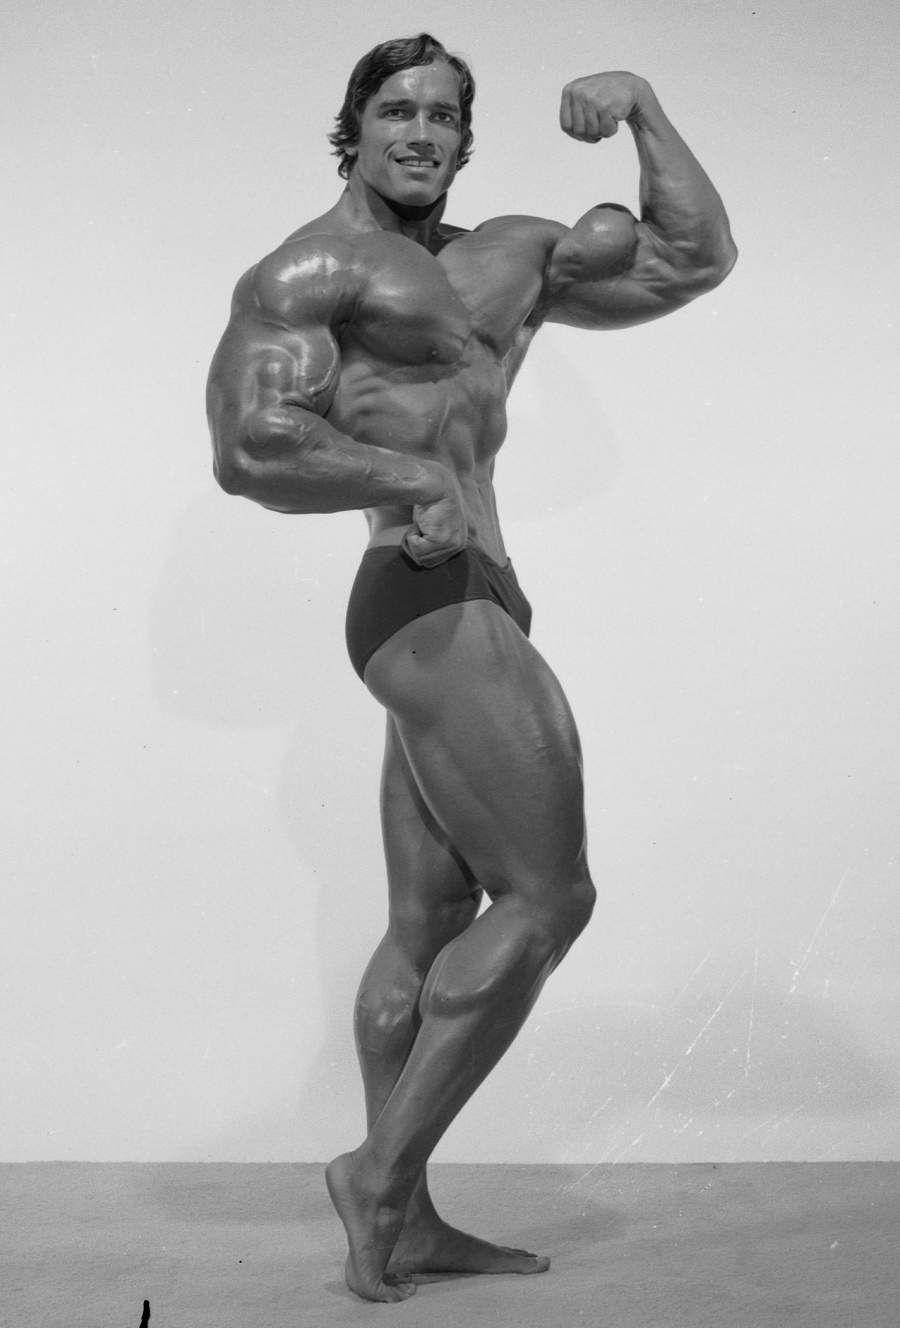 Arnold Schwarzenegger Best Gallery Of This Bodybuilding Icon!